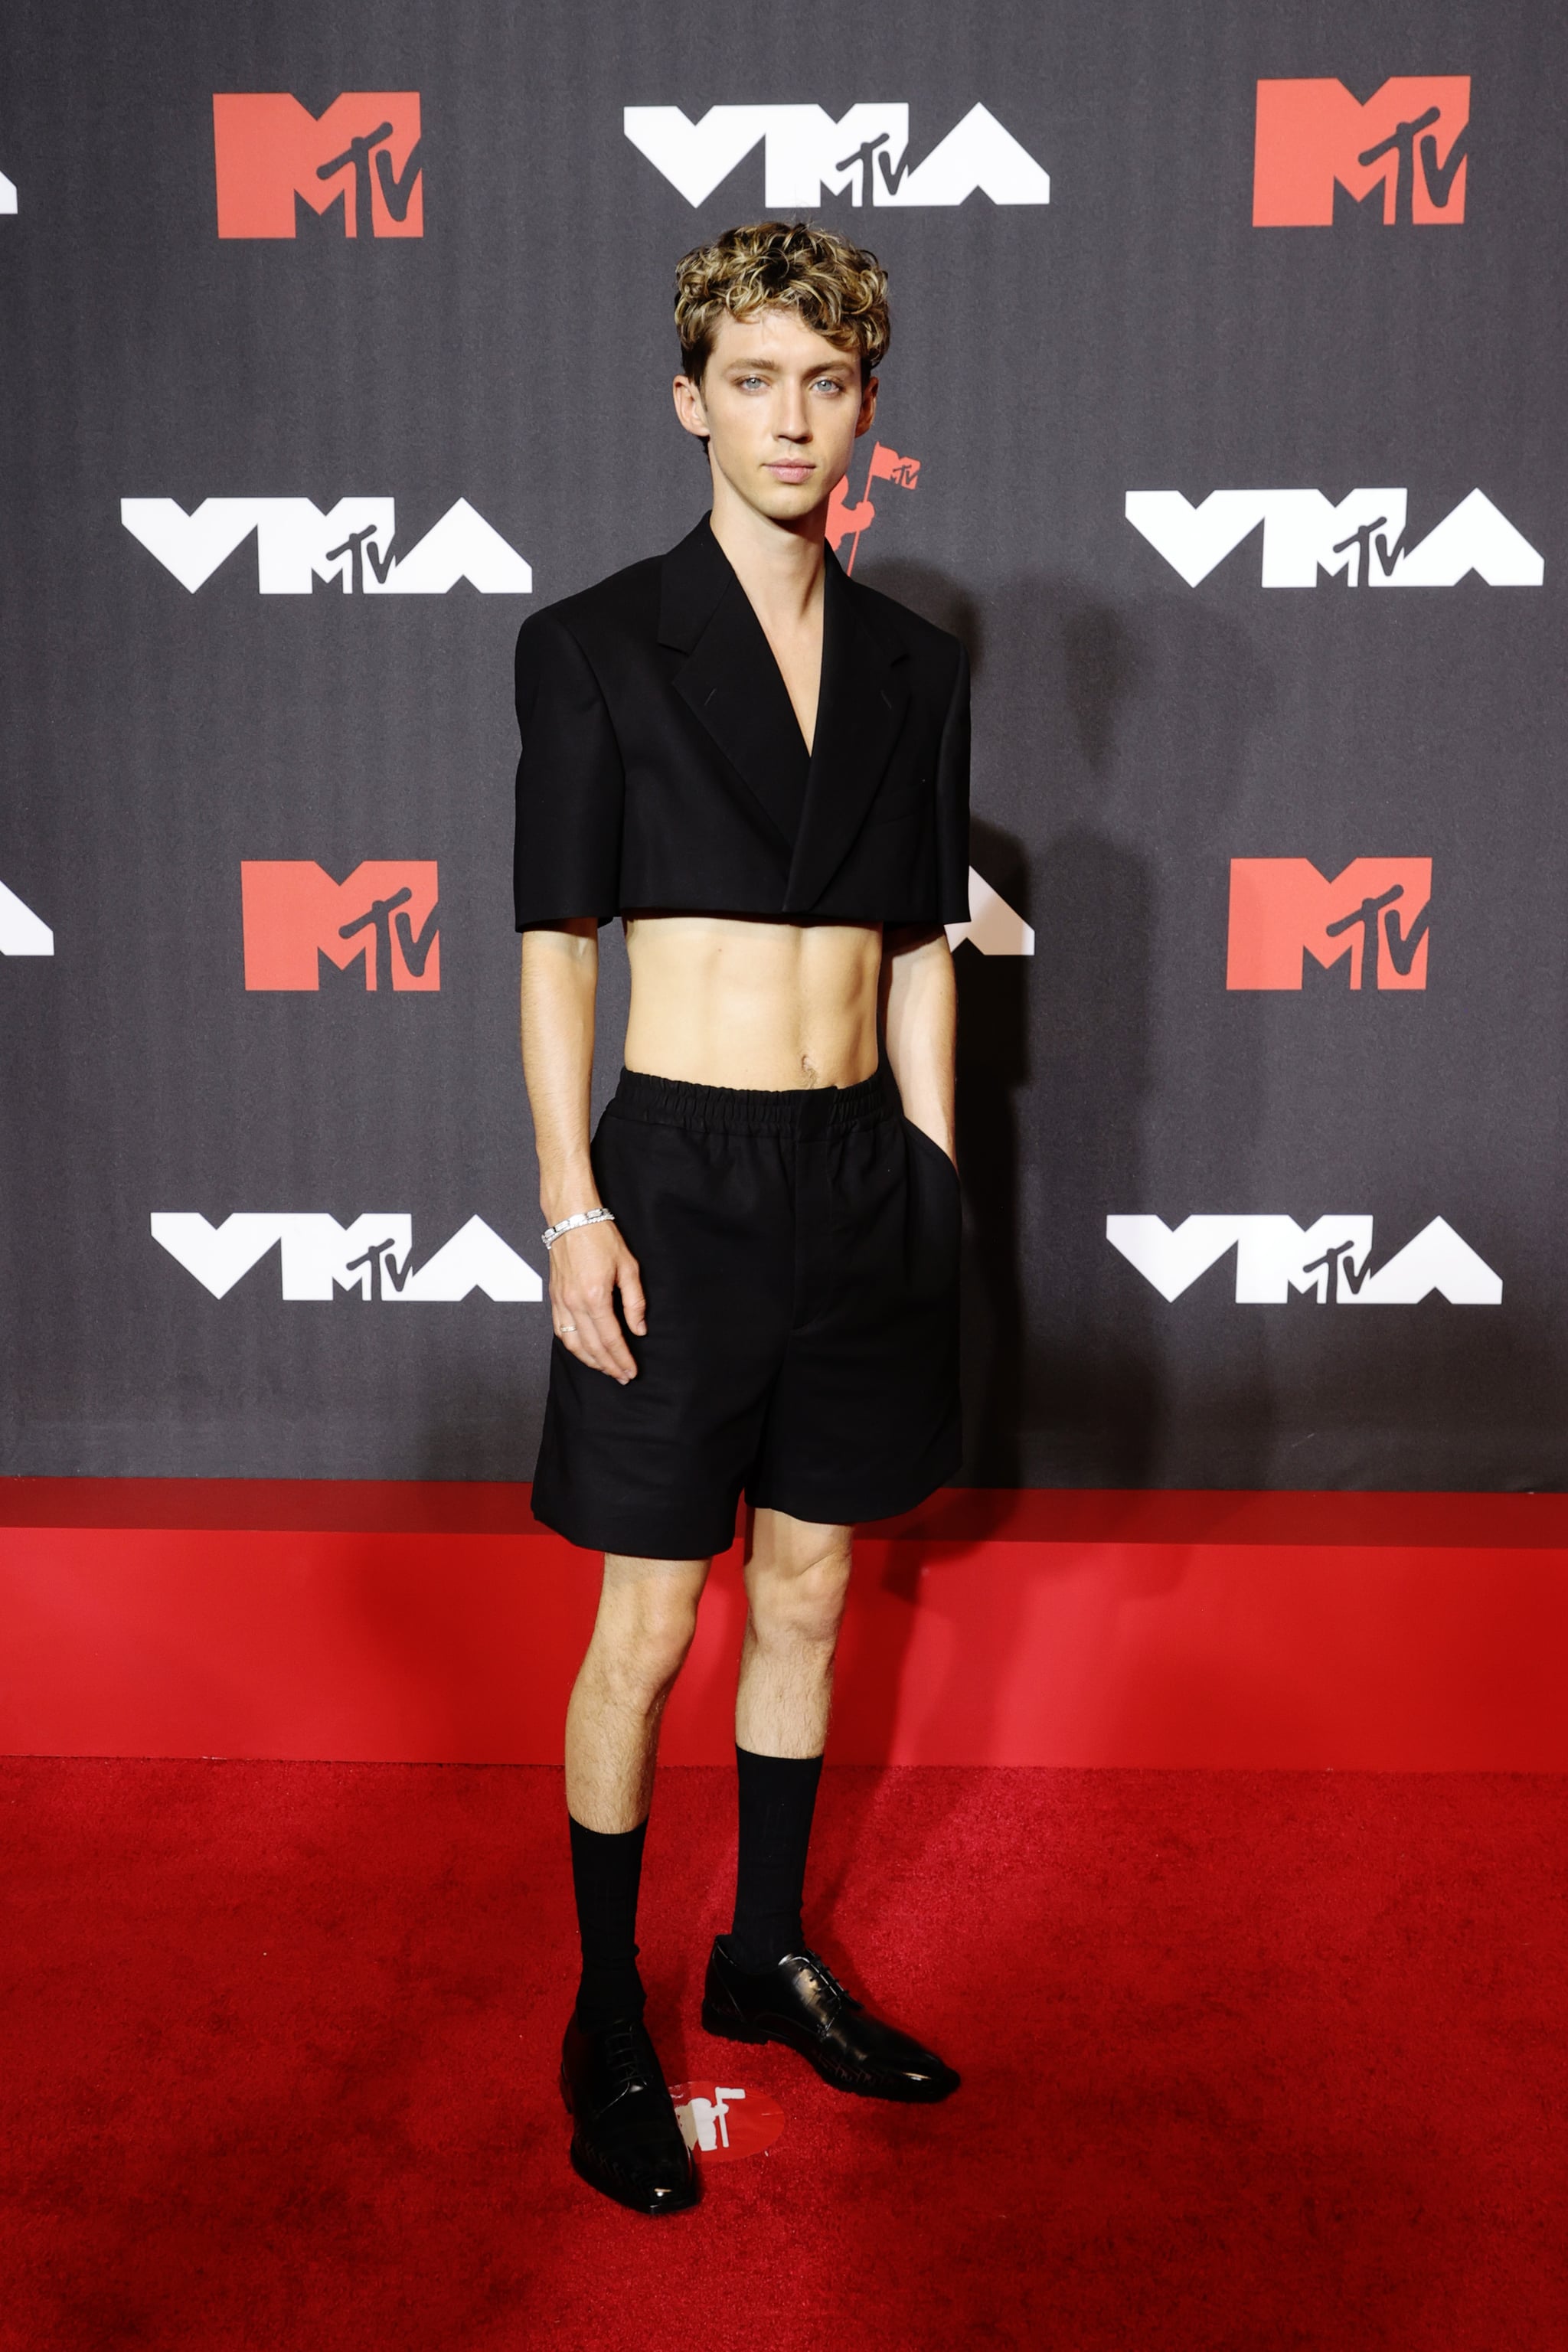 Troye Sivan at the 2021 MTV VMAs